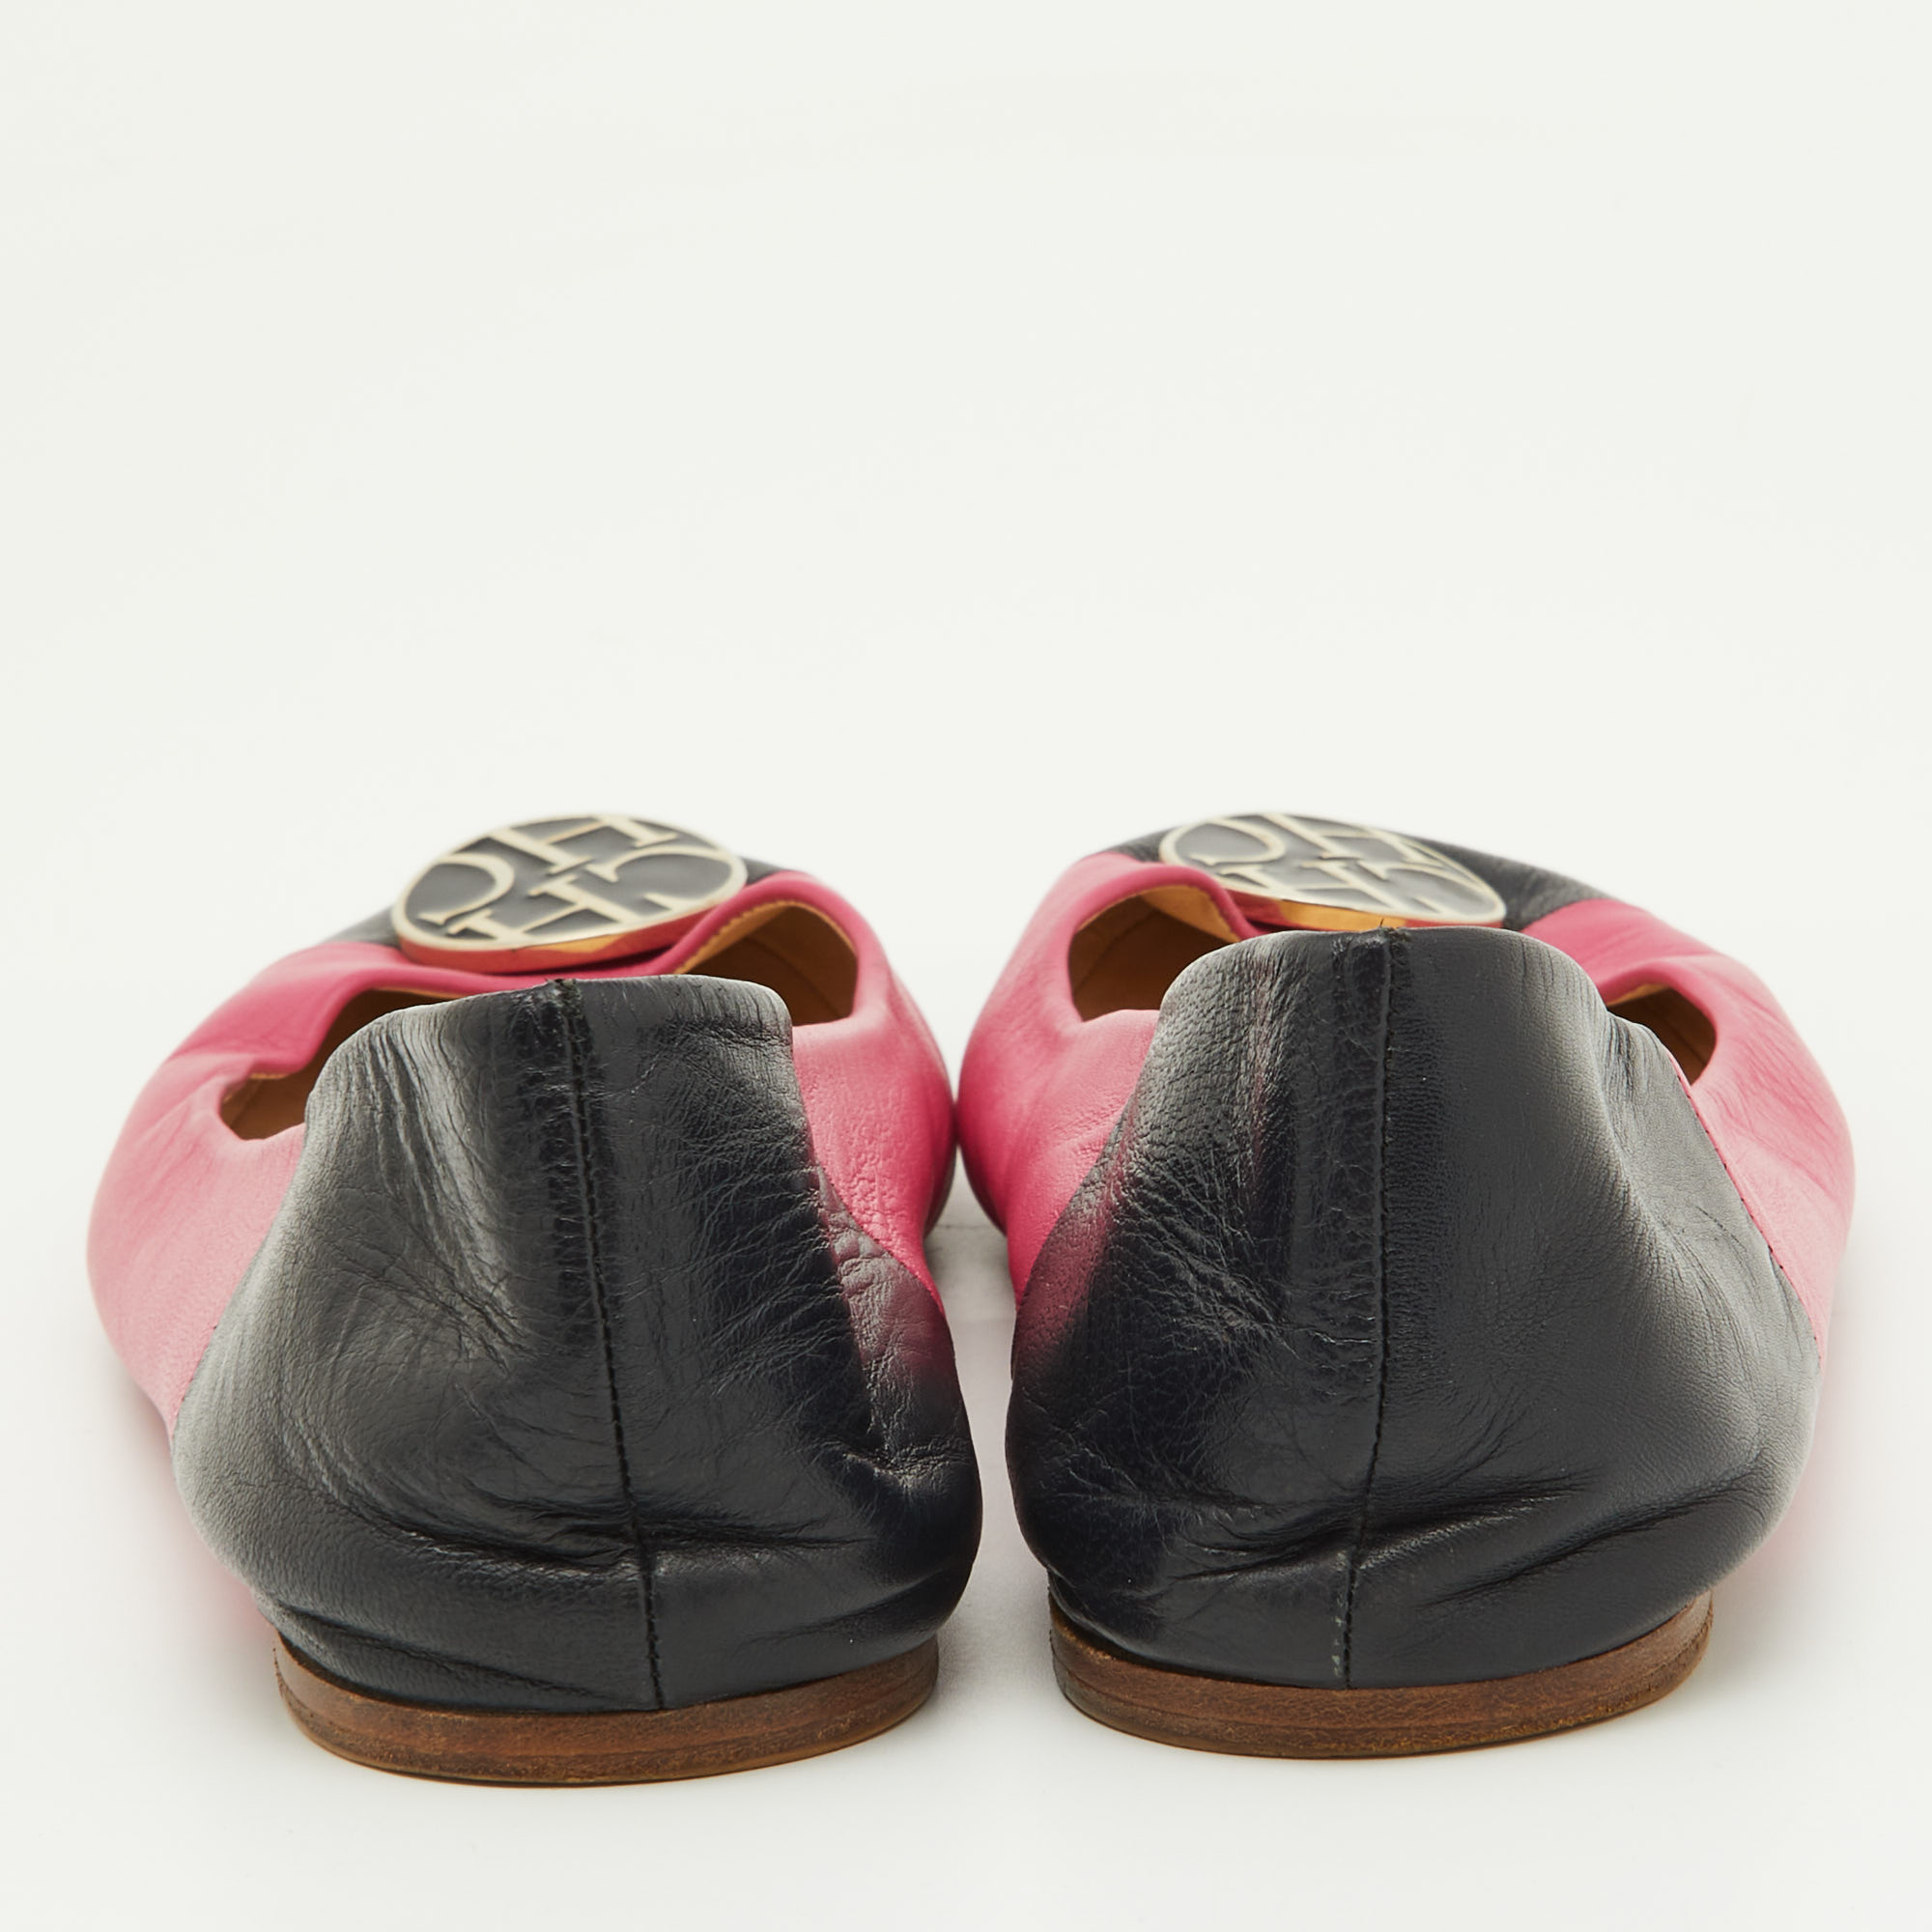 CH Carolina Herrera Pink/Black Leather Logo Ballet Flats Size 39